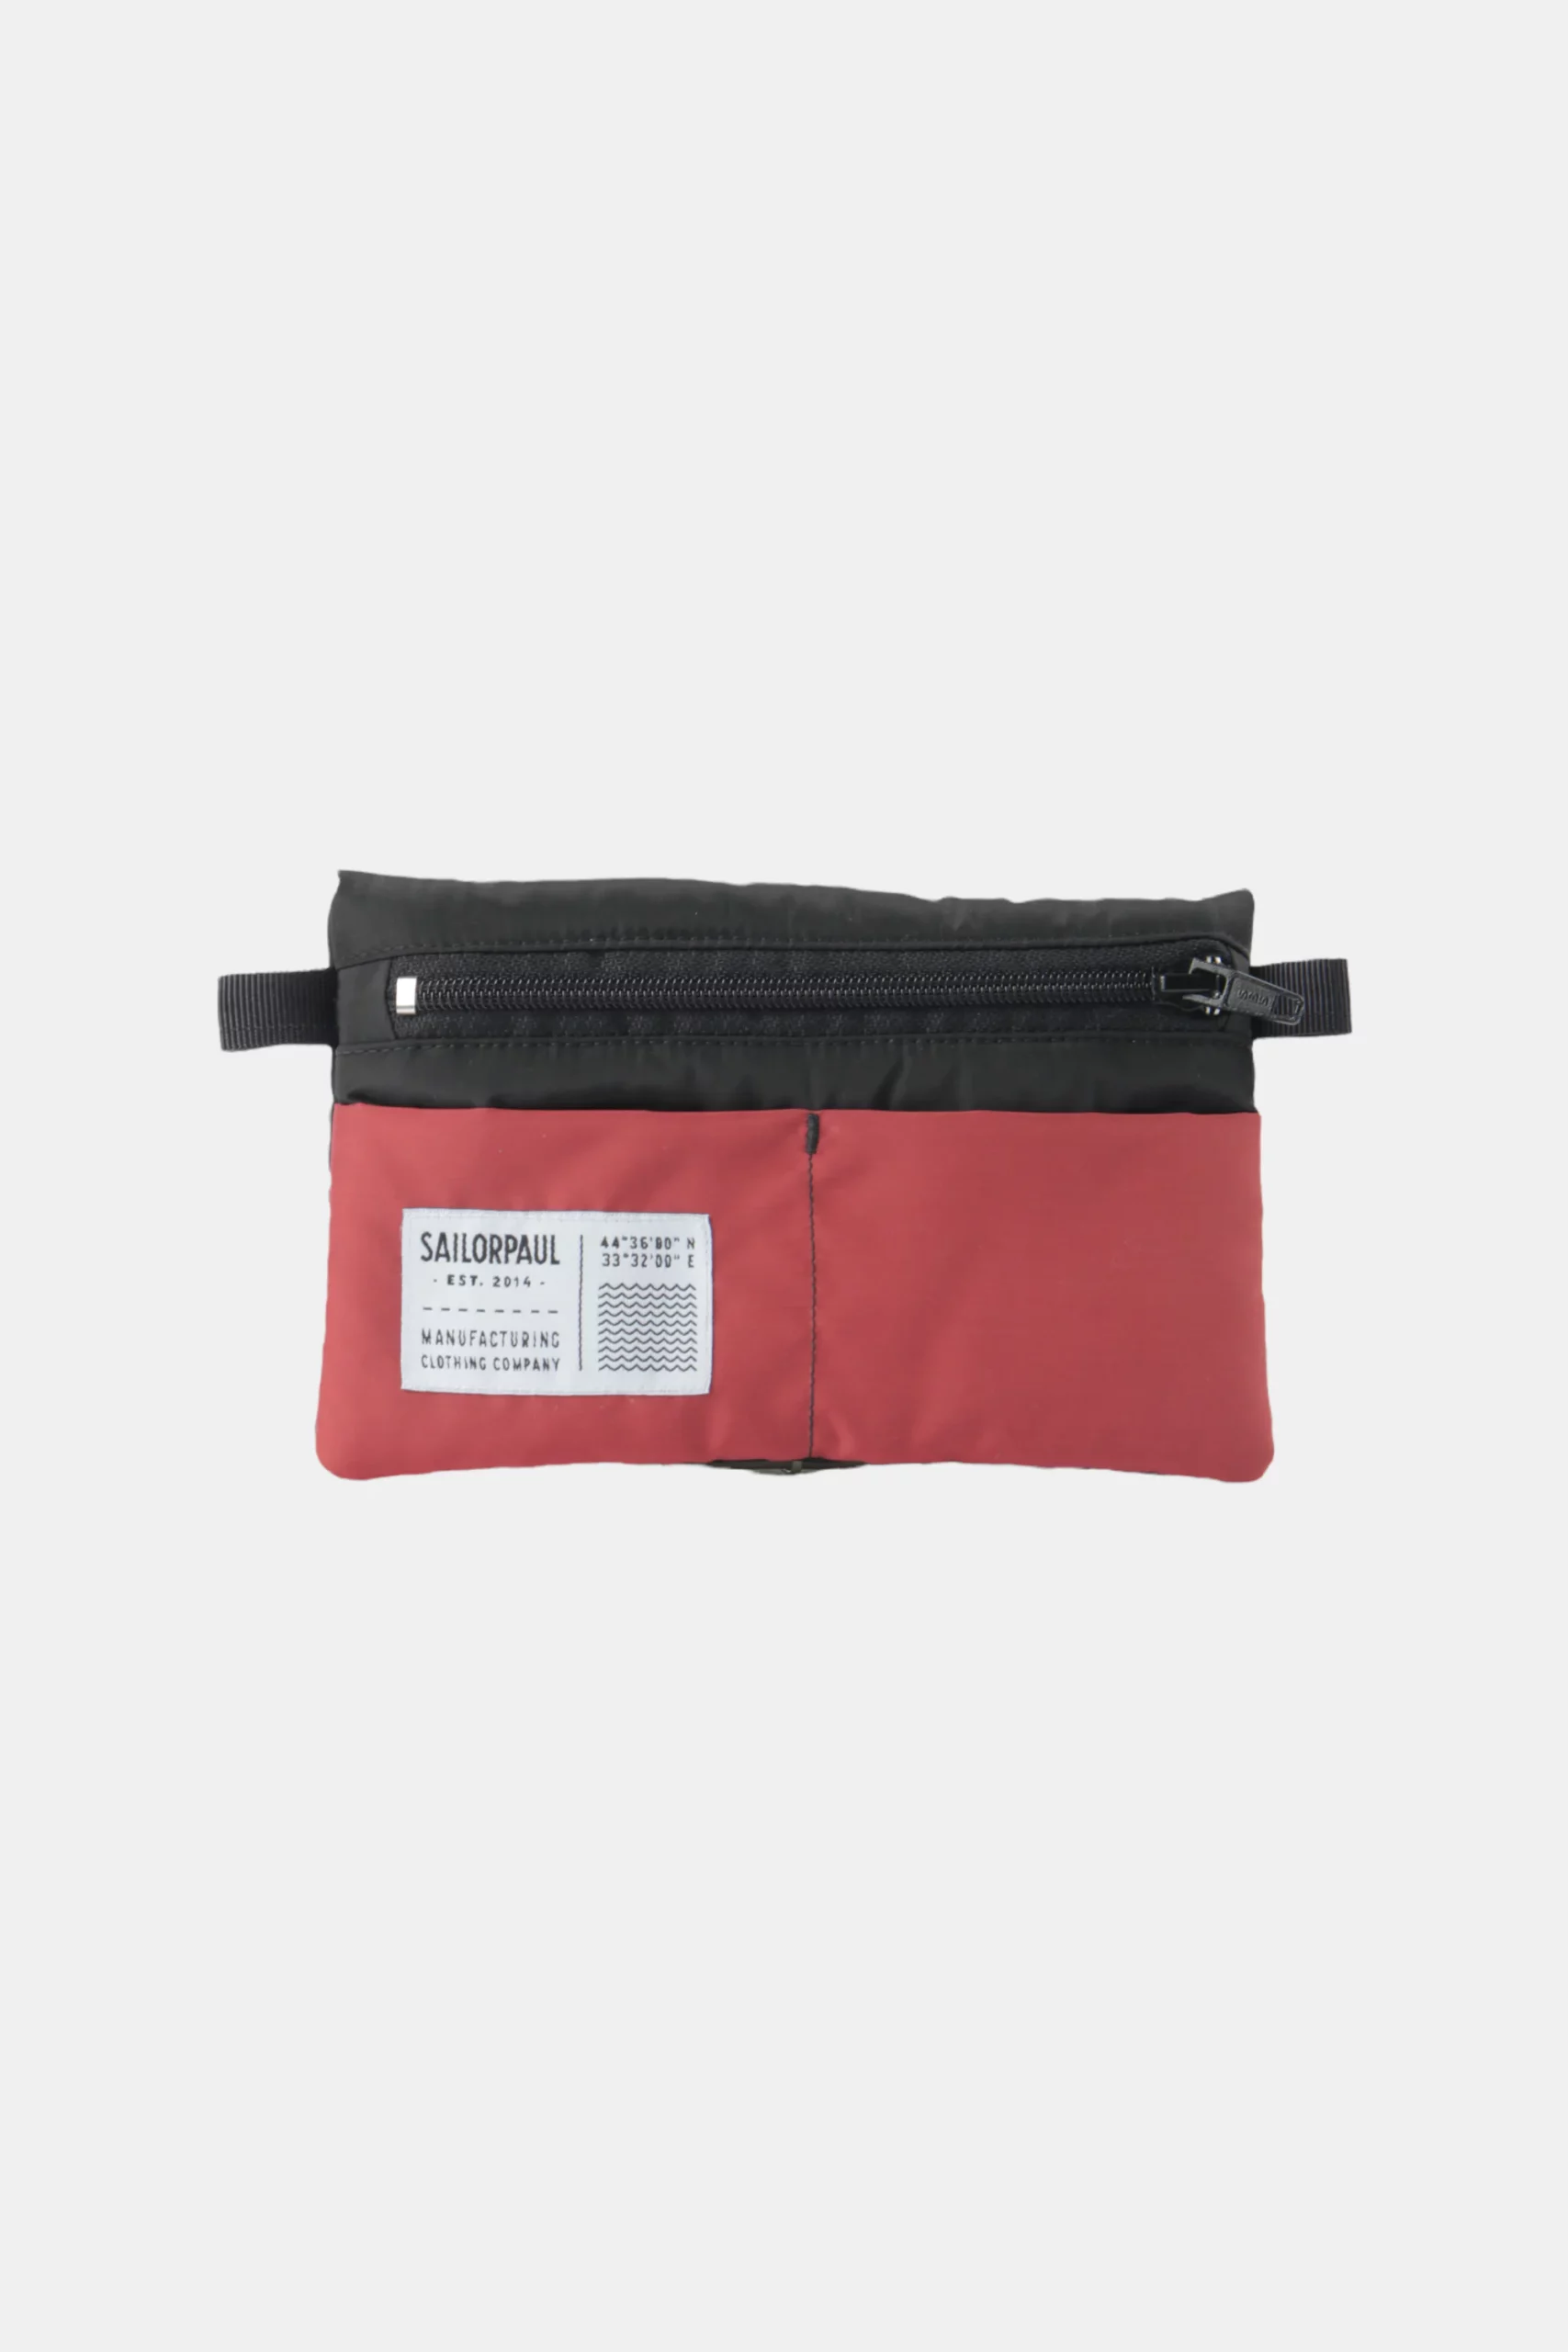 koshelek sailorpaul nylon 2 pocket red black 1